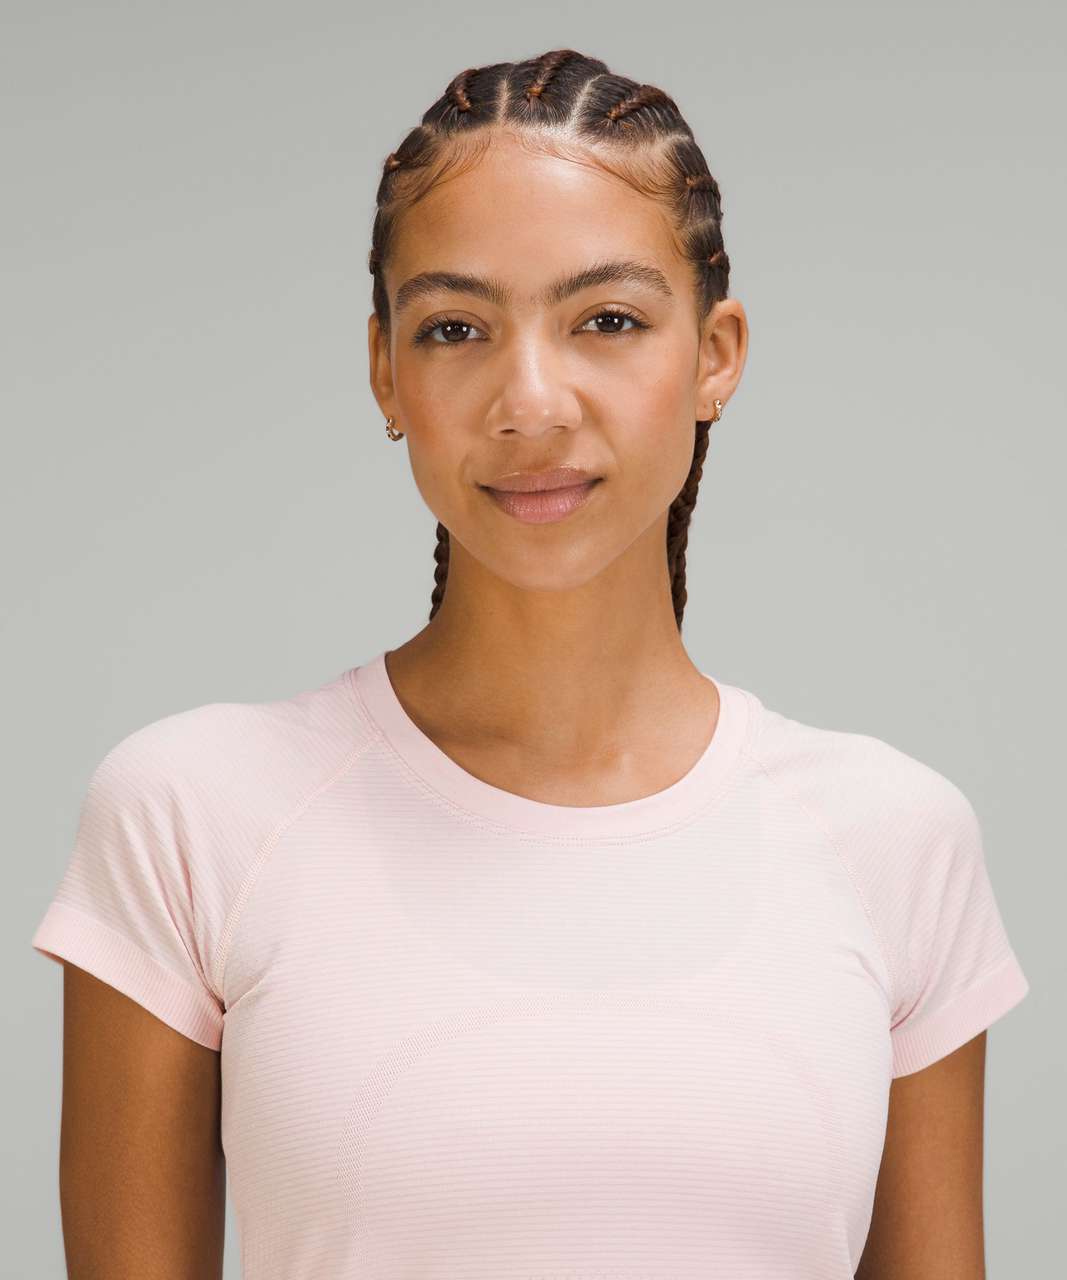 Lululemon Swiftly Tech Short Sleeve Shirt 2.0 - Pale Raspberry